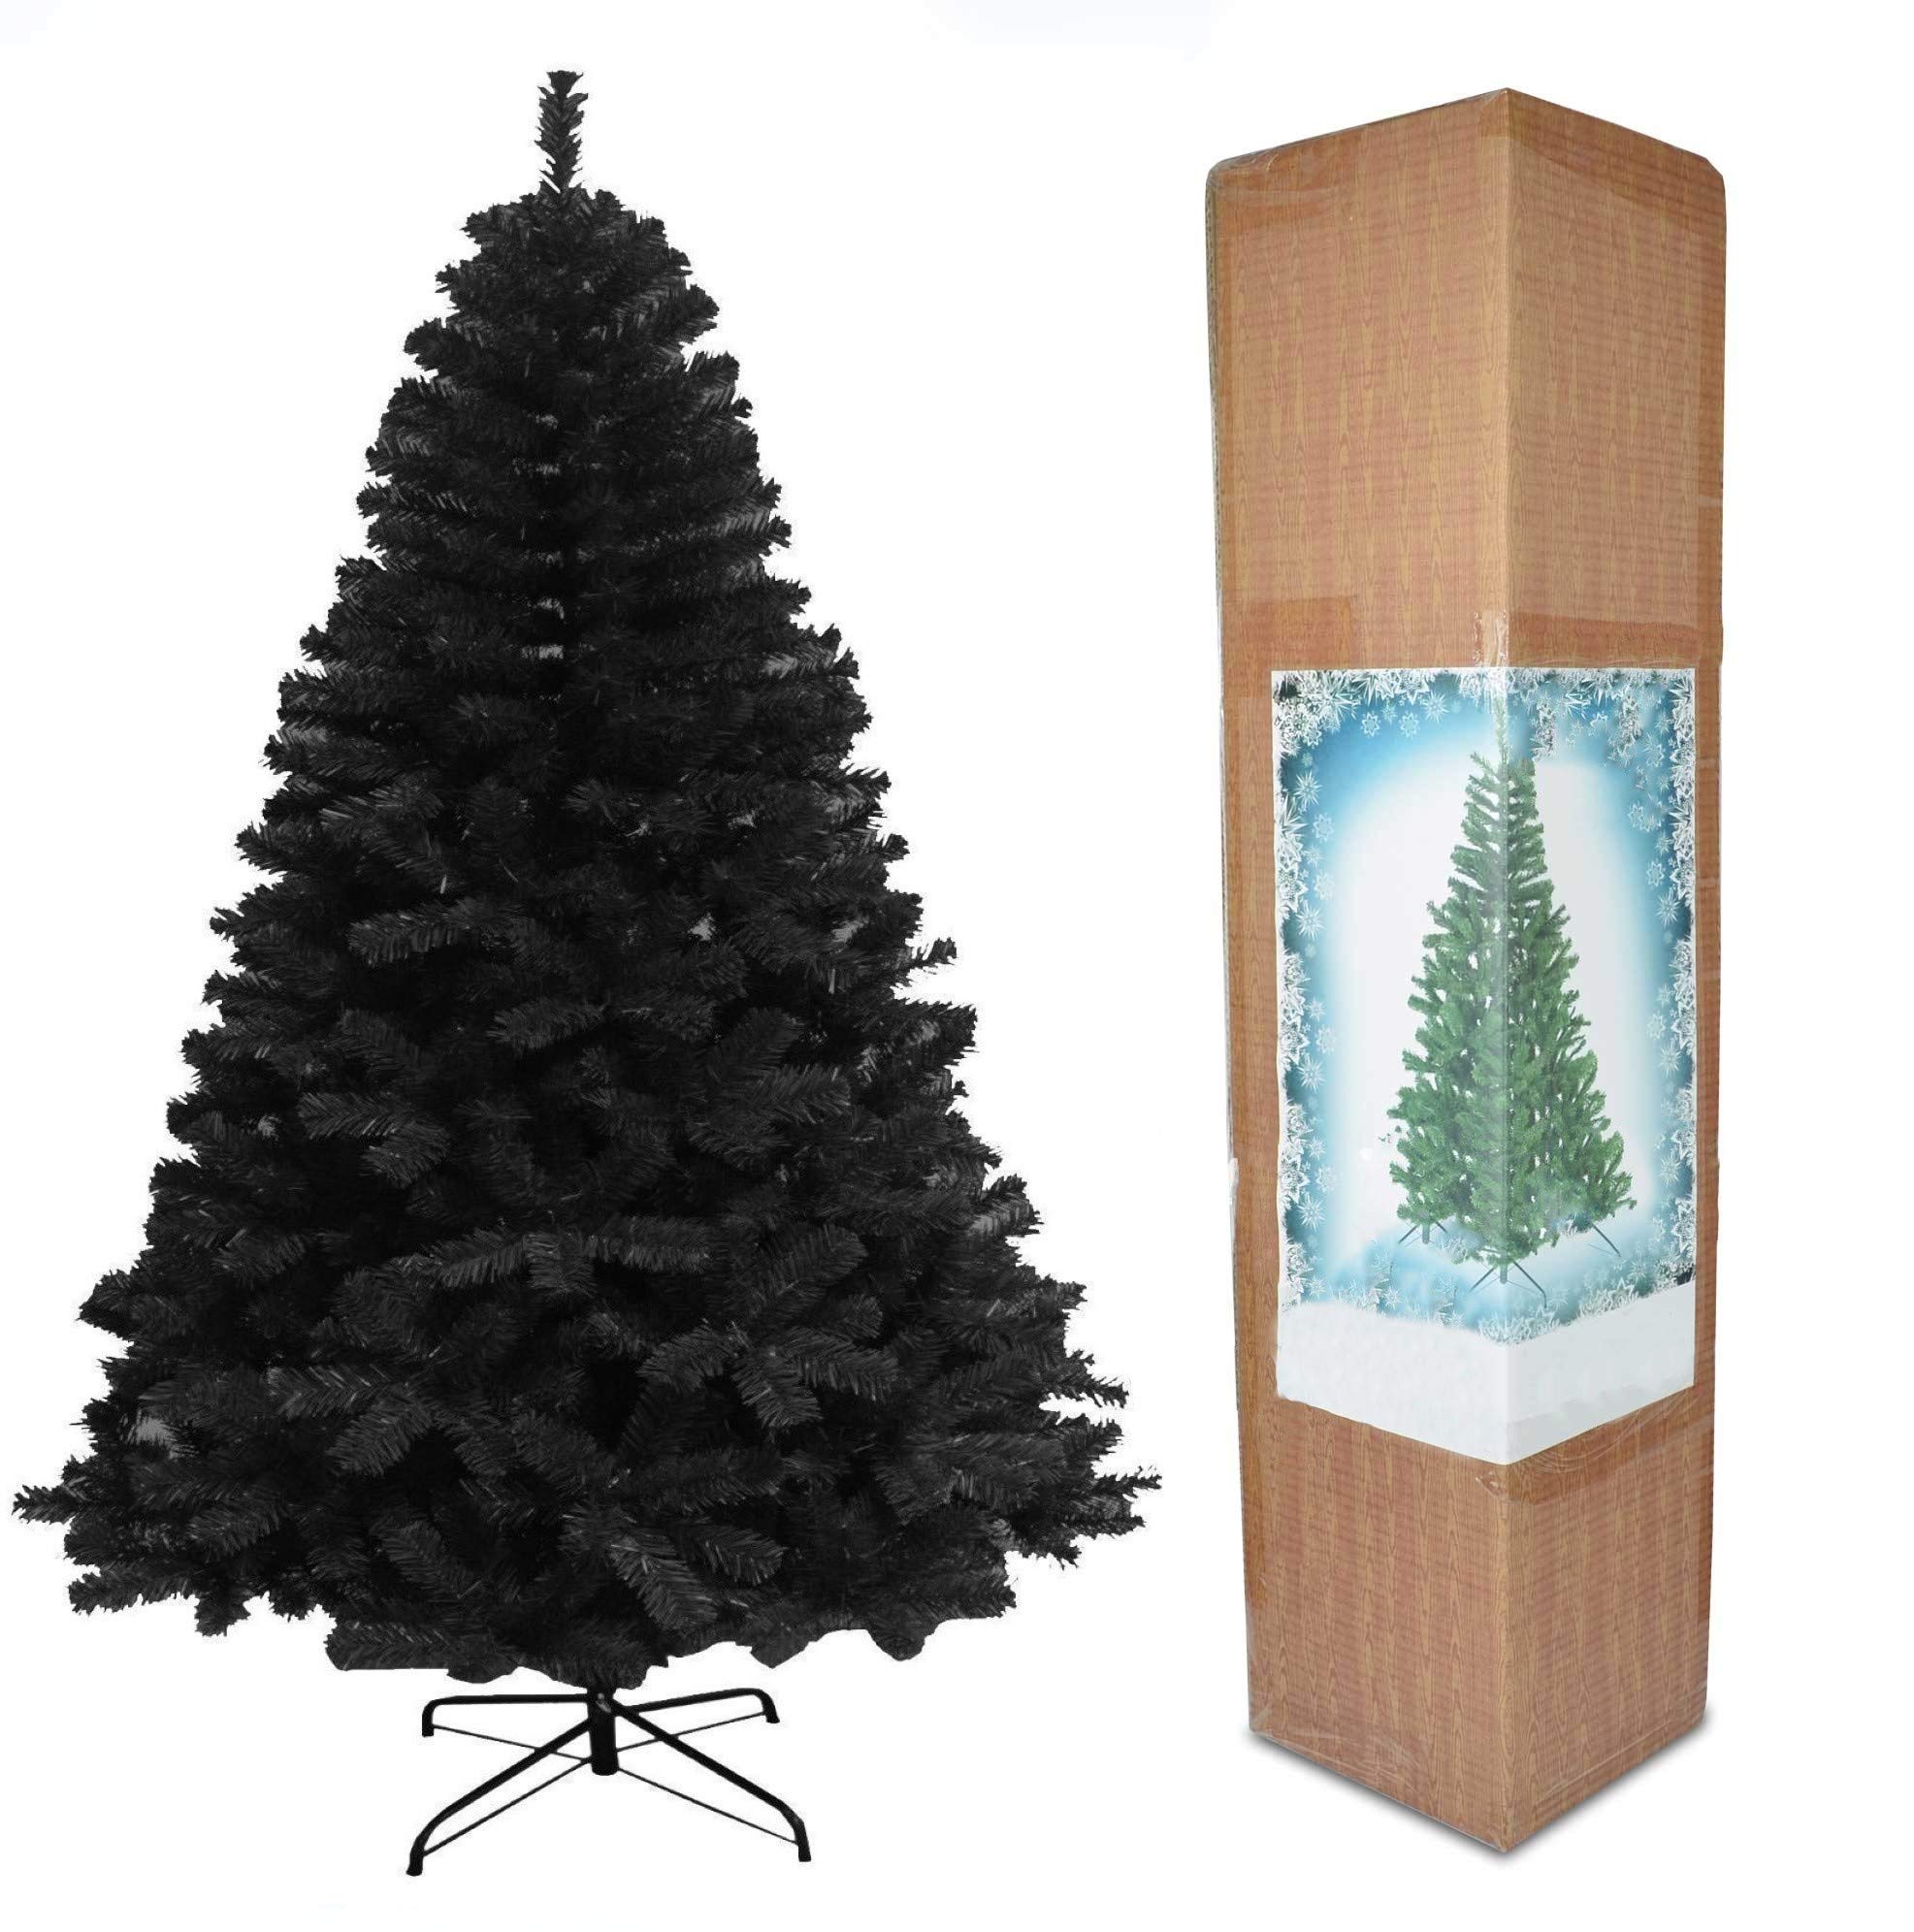 Where To Buy A Black Christmas Tree?